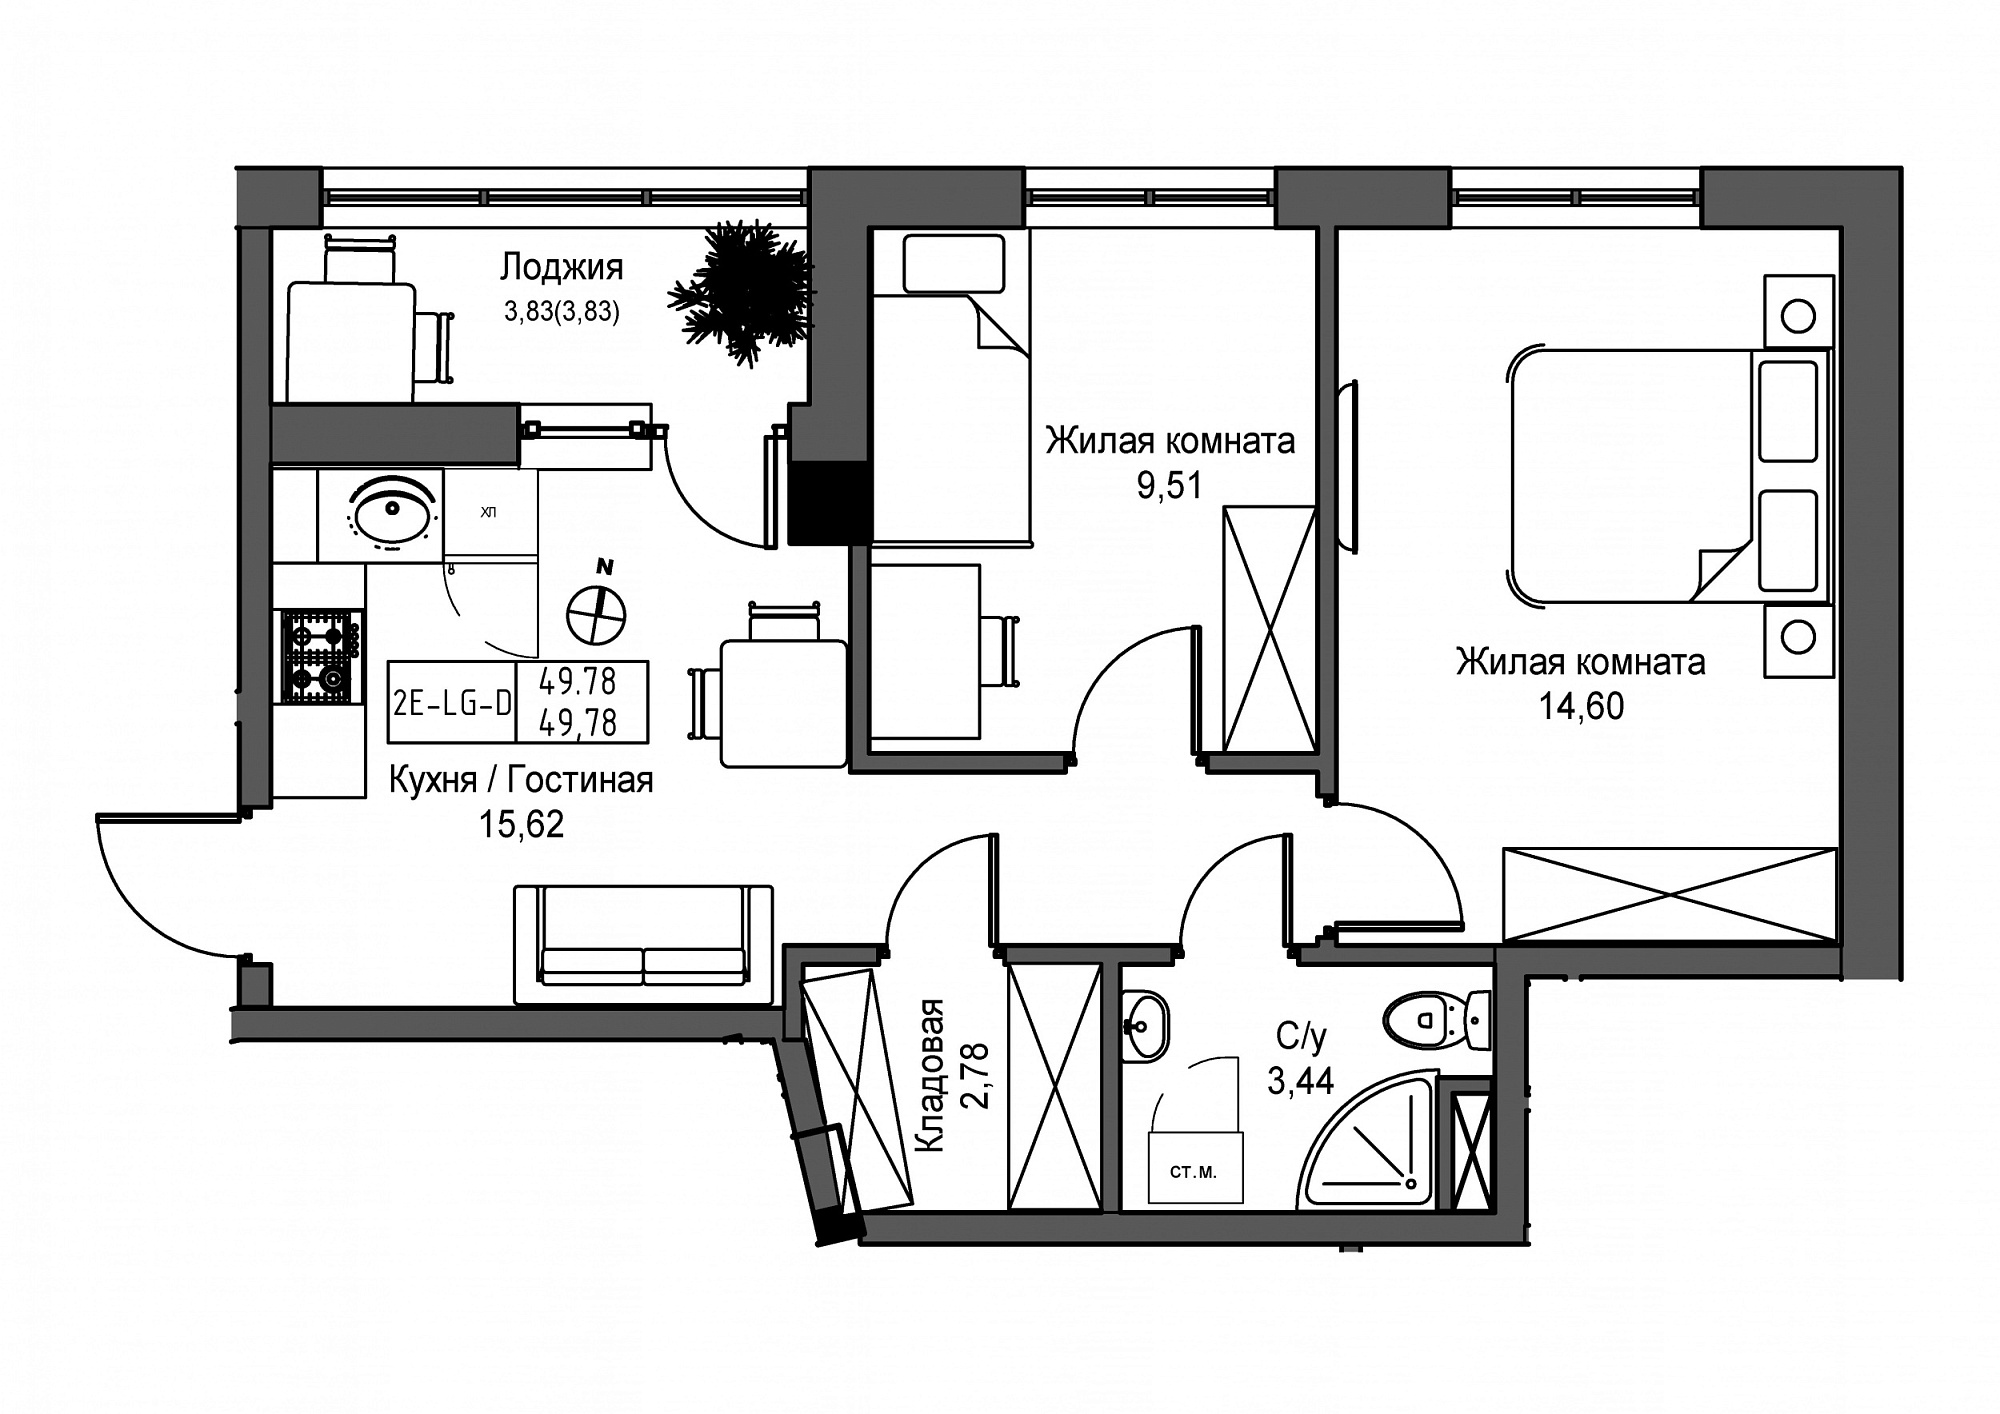 Планування 2-к квартира площею 49.78м2, UM-004-03/0006.